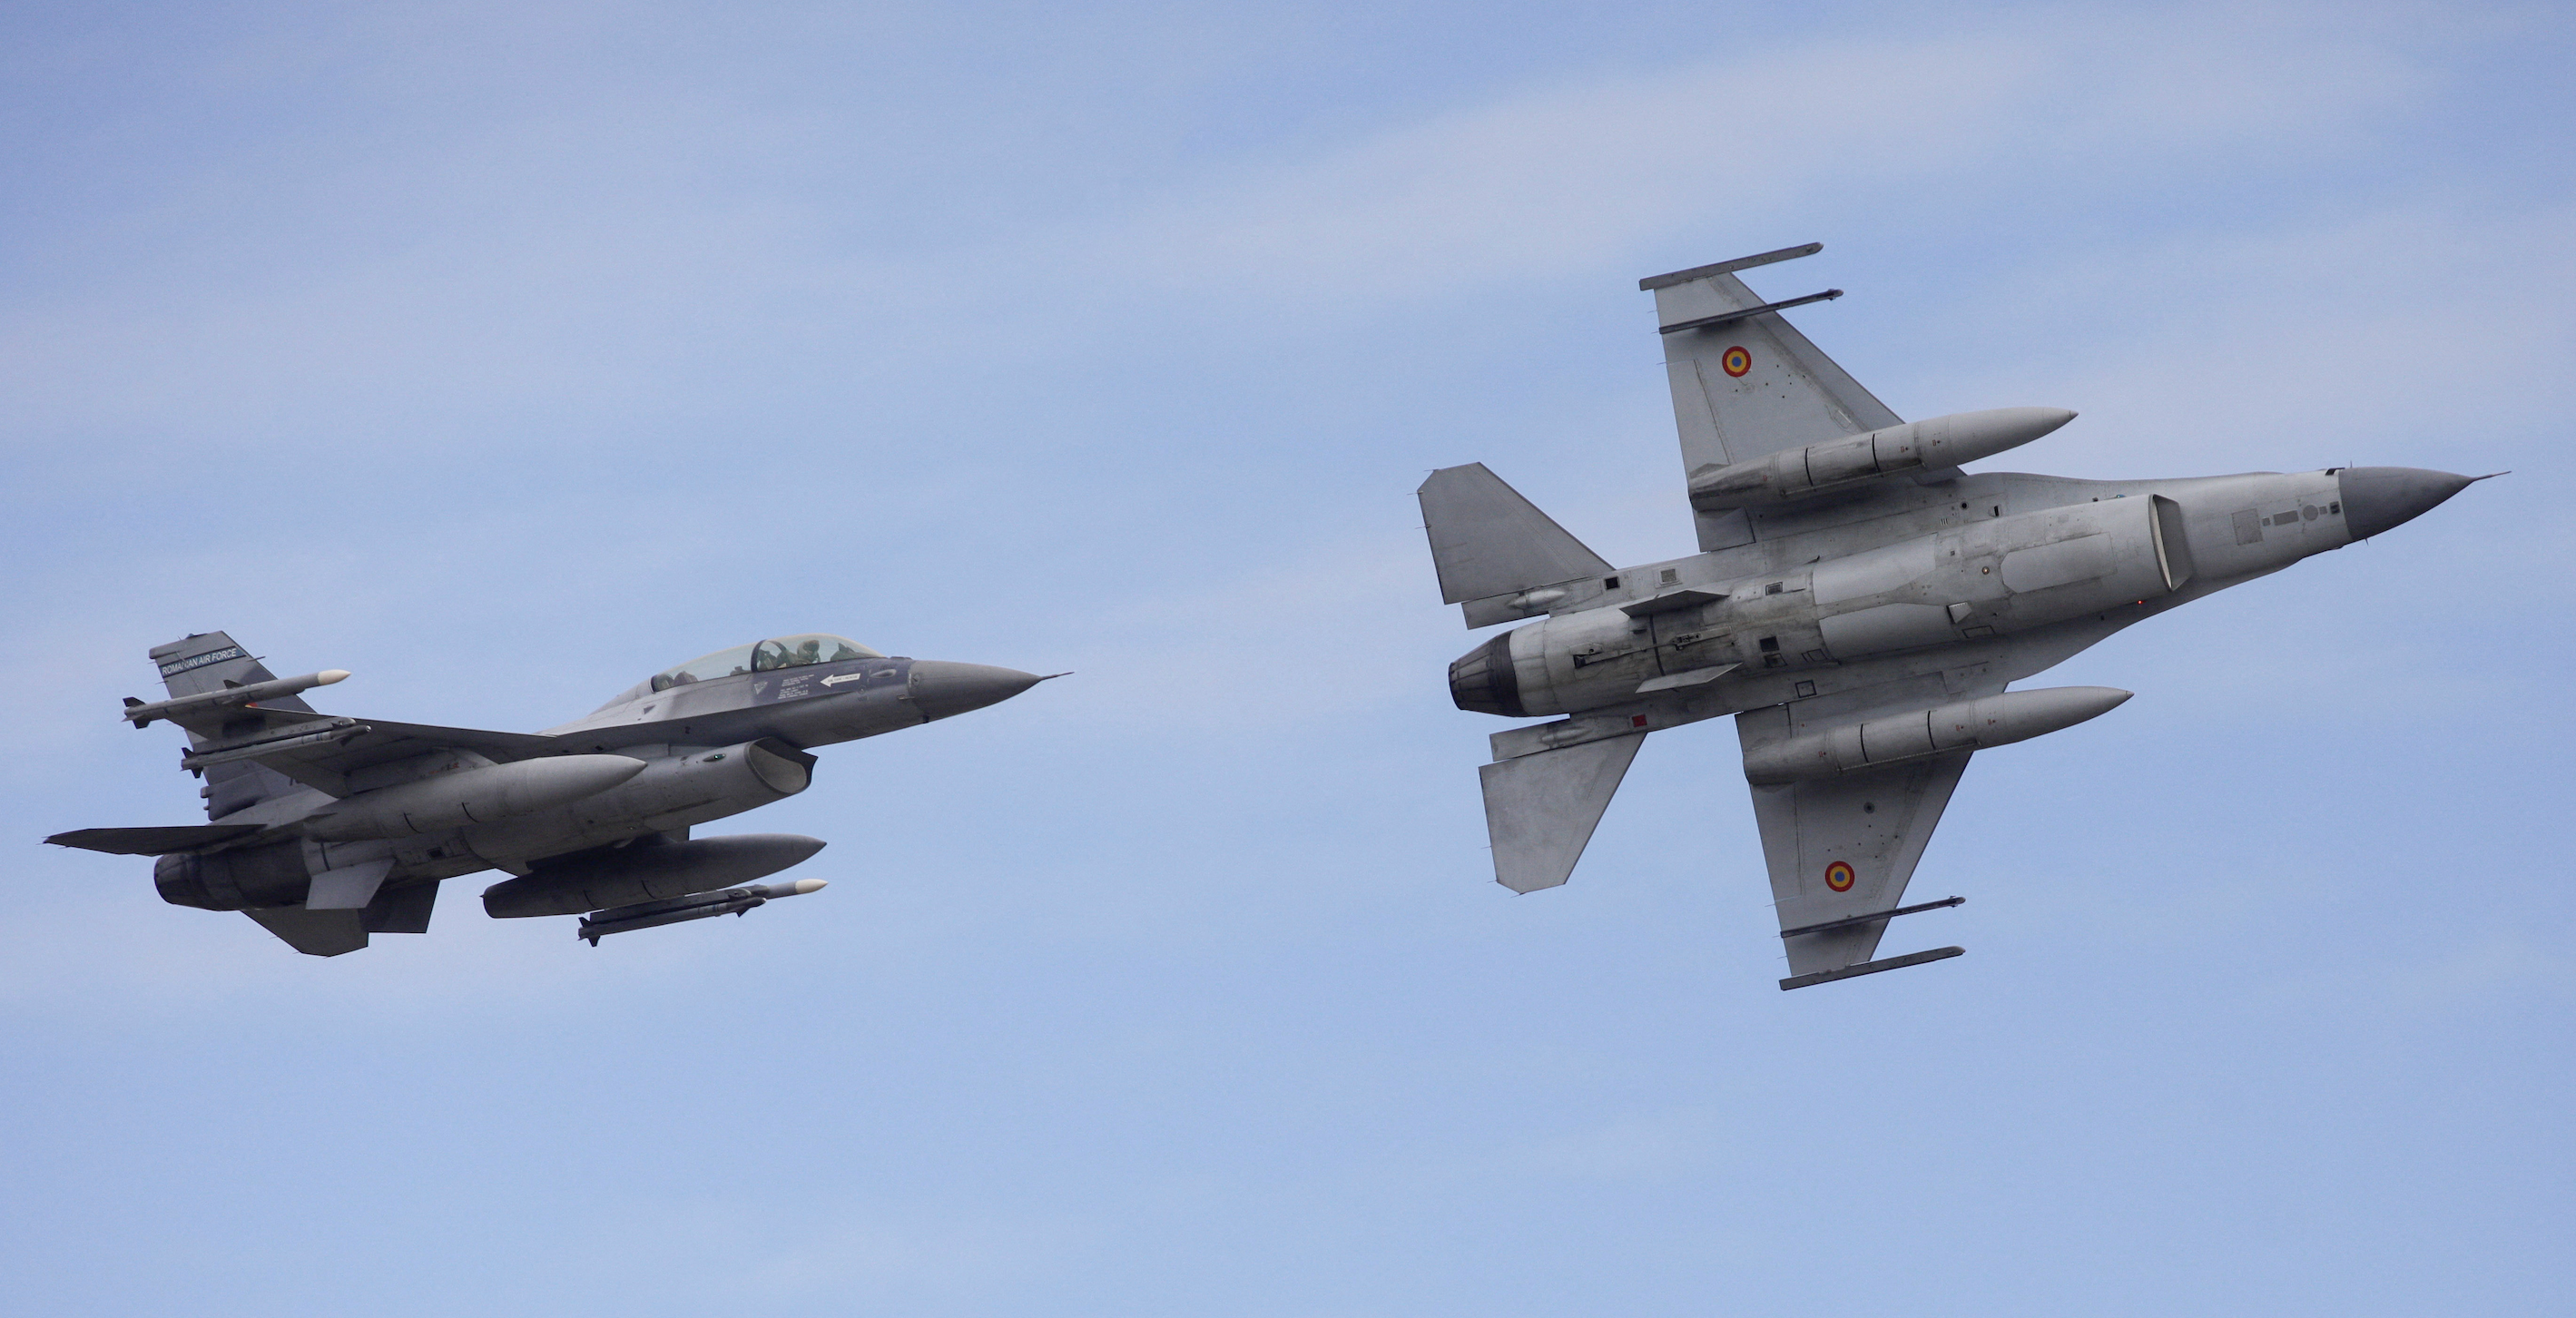 Romania opens F-16 training hub for Ukraine, NATO allies